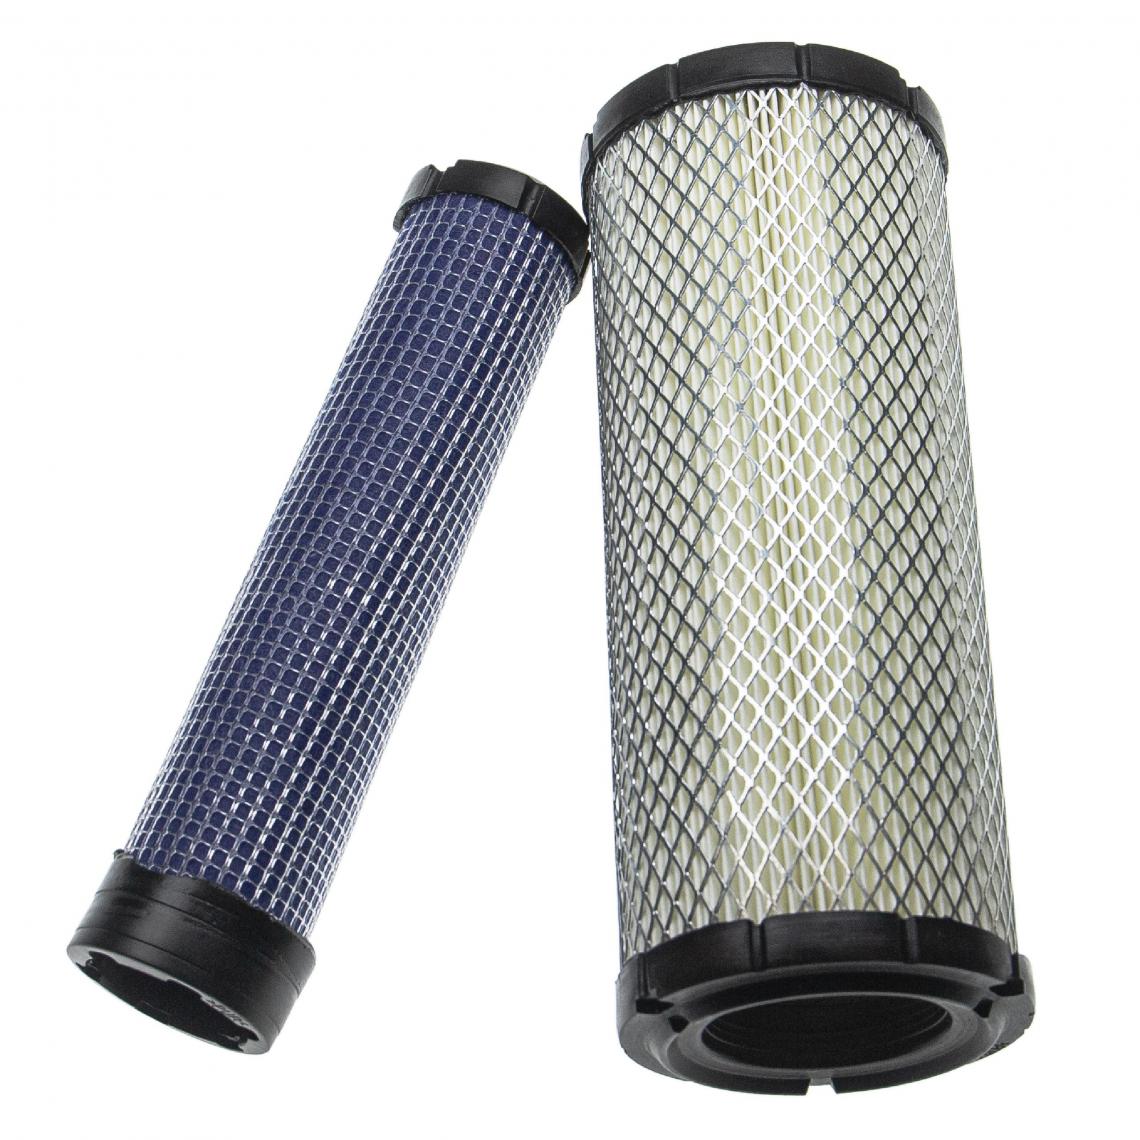 Vhbw - vhbw Lot de filtres compatible avec Toro 3280D, 328D, 3320, 3500D, 3505D, 5210, 5400D, 5410 engin de chantier; 1x filtre interne, 1x filtre extérieur - Autre appareil de mesure